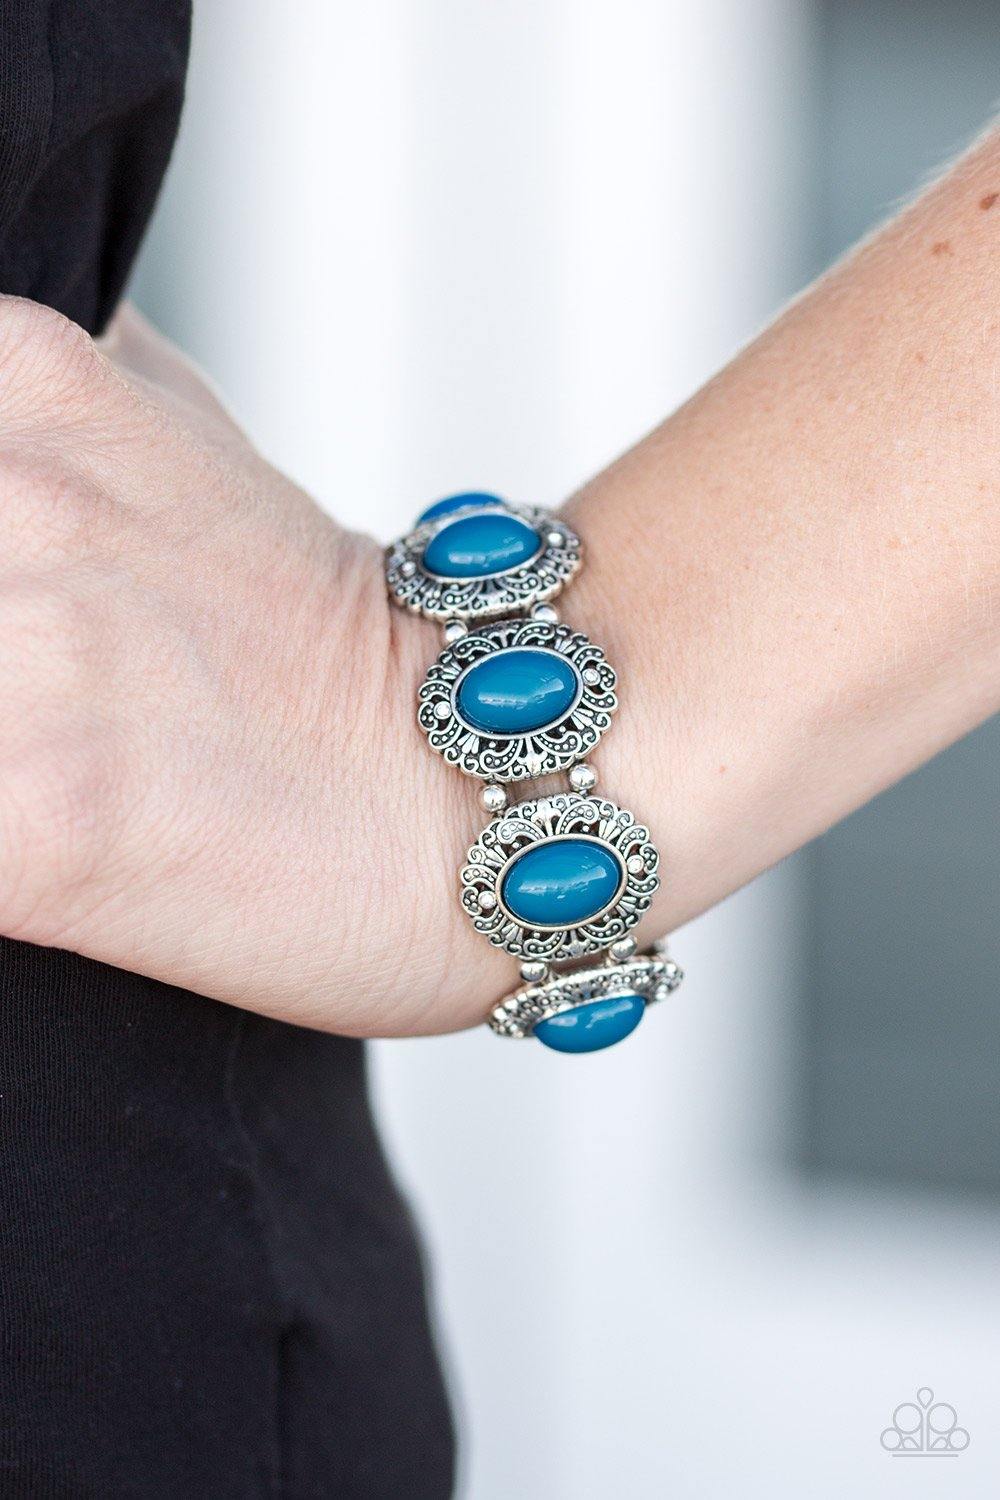 Ventura Vogue Blue Bracelet - Nothin' But Jewelry by Mz. Netta